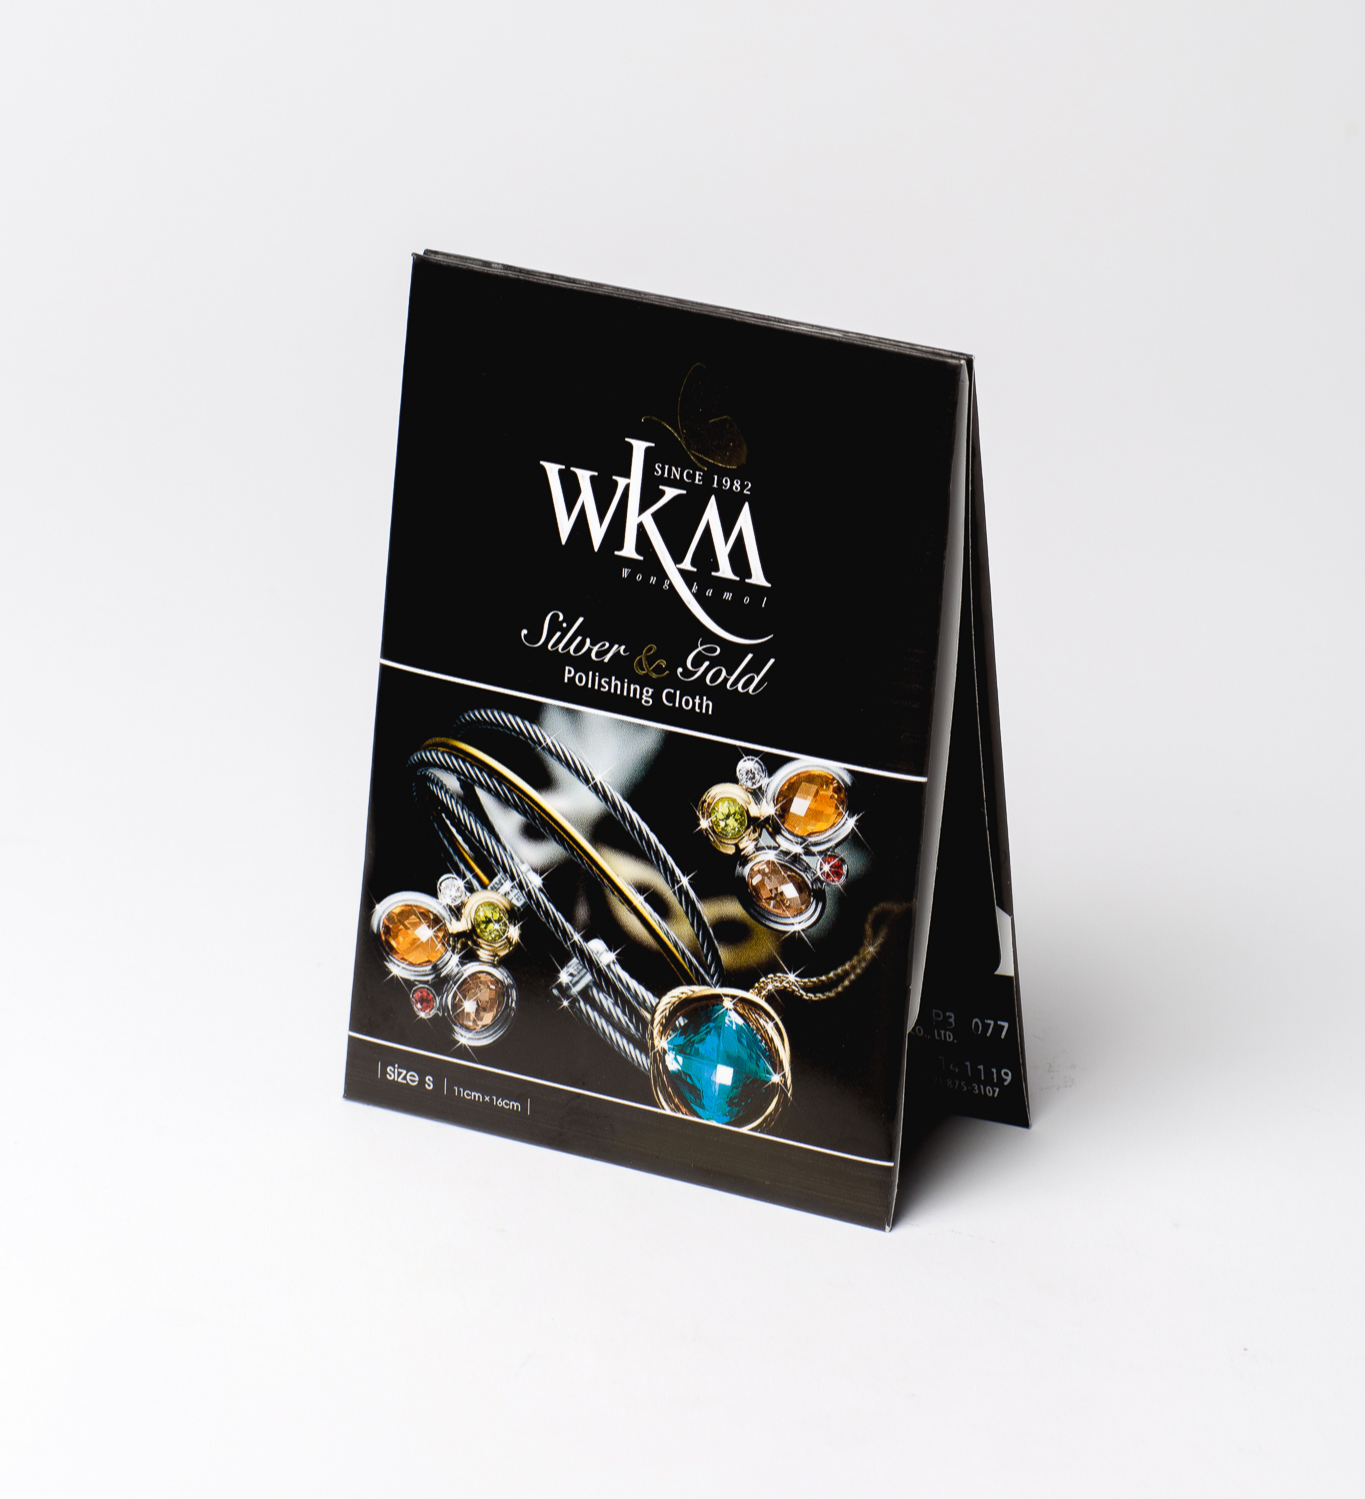 WKM Silver & Gold Polishing Cloth